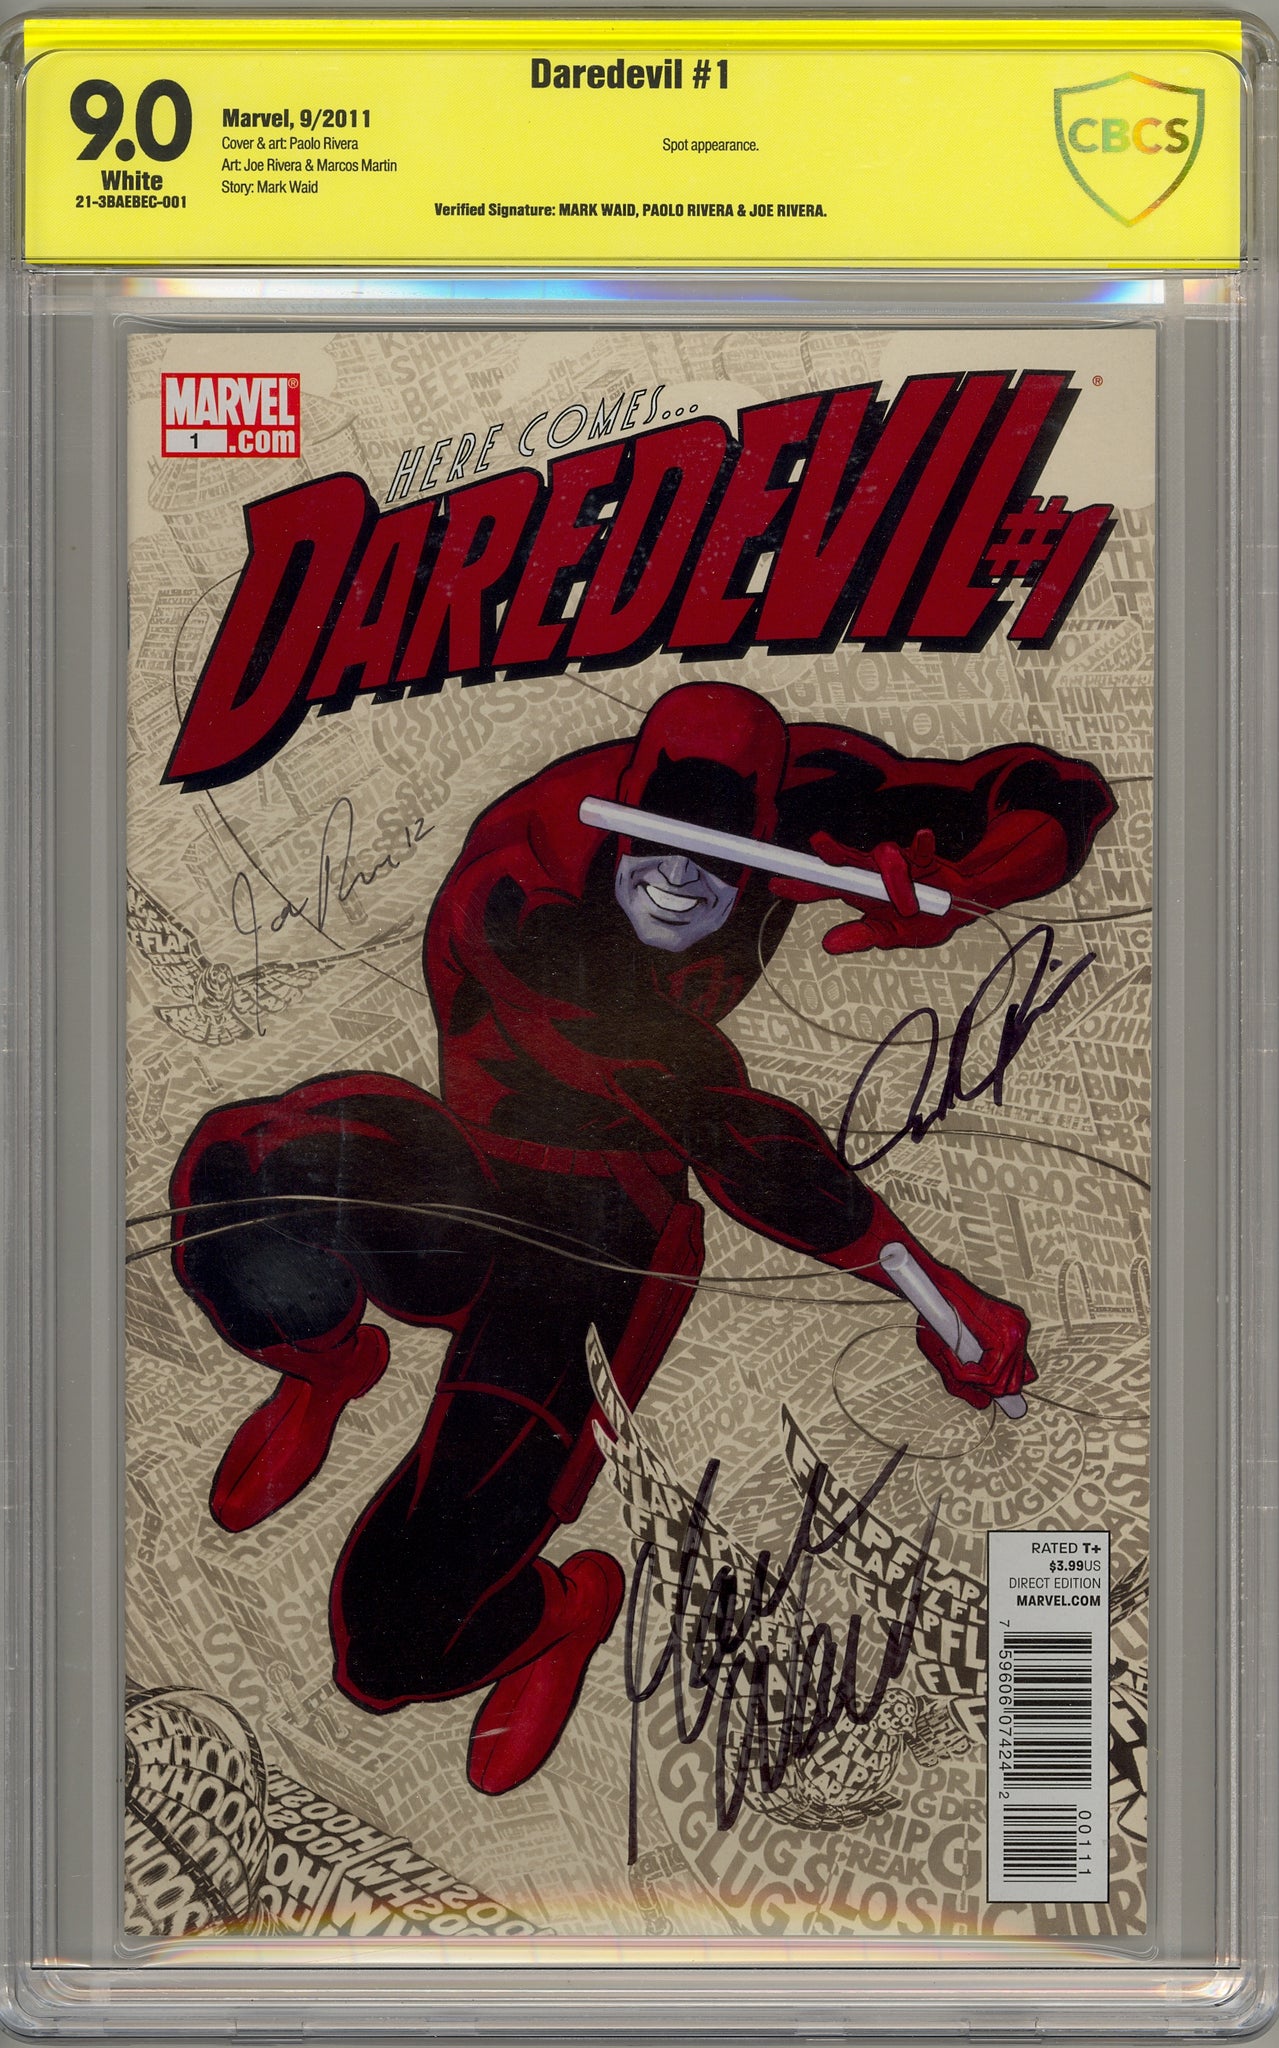 Daredevil #1 (2011) CBCS Verified Signature